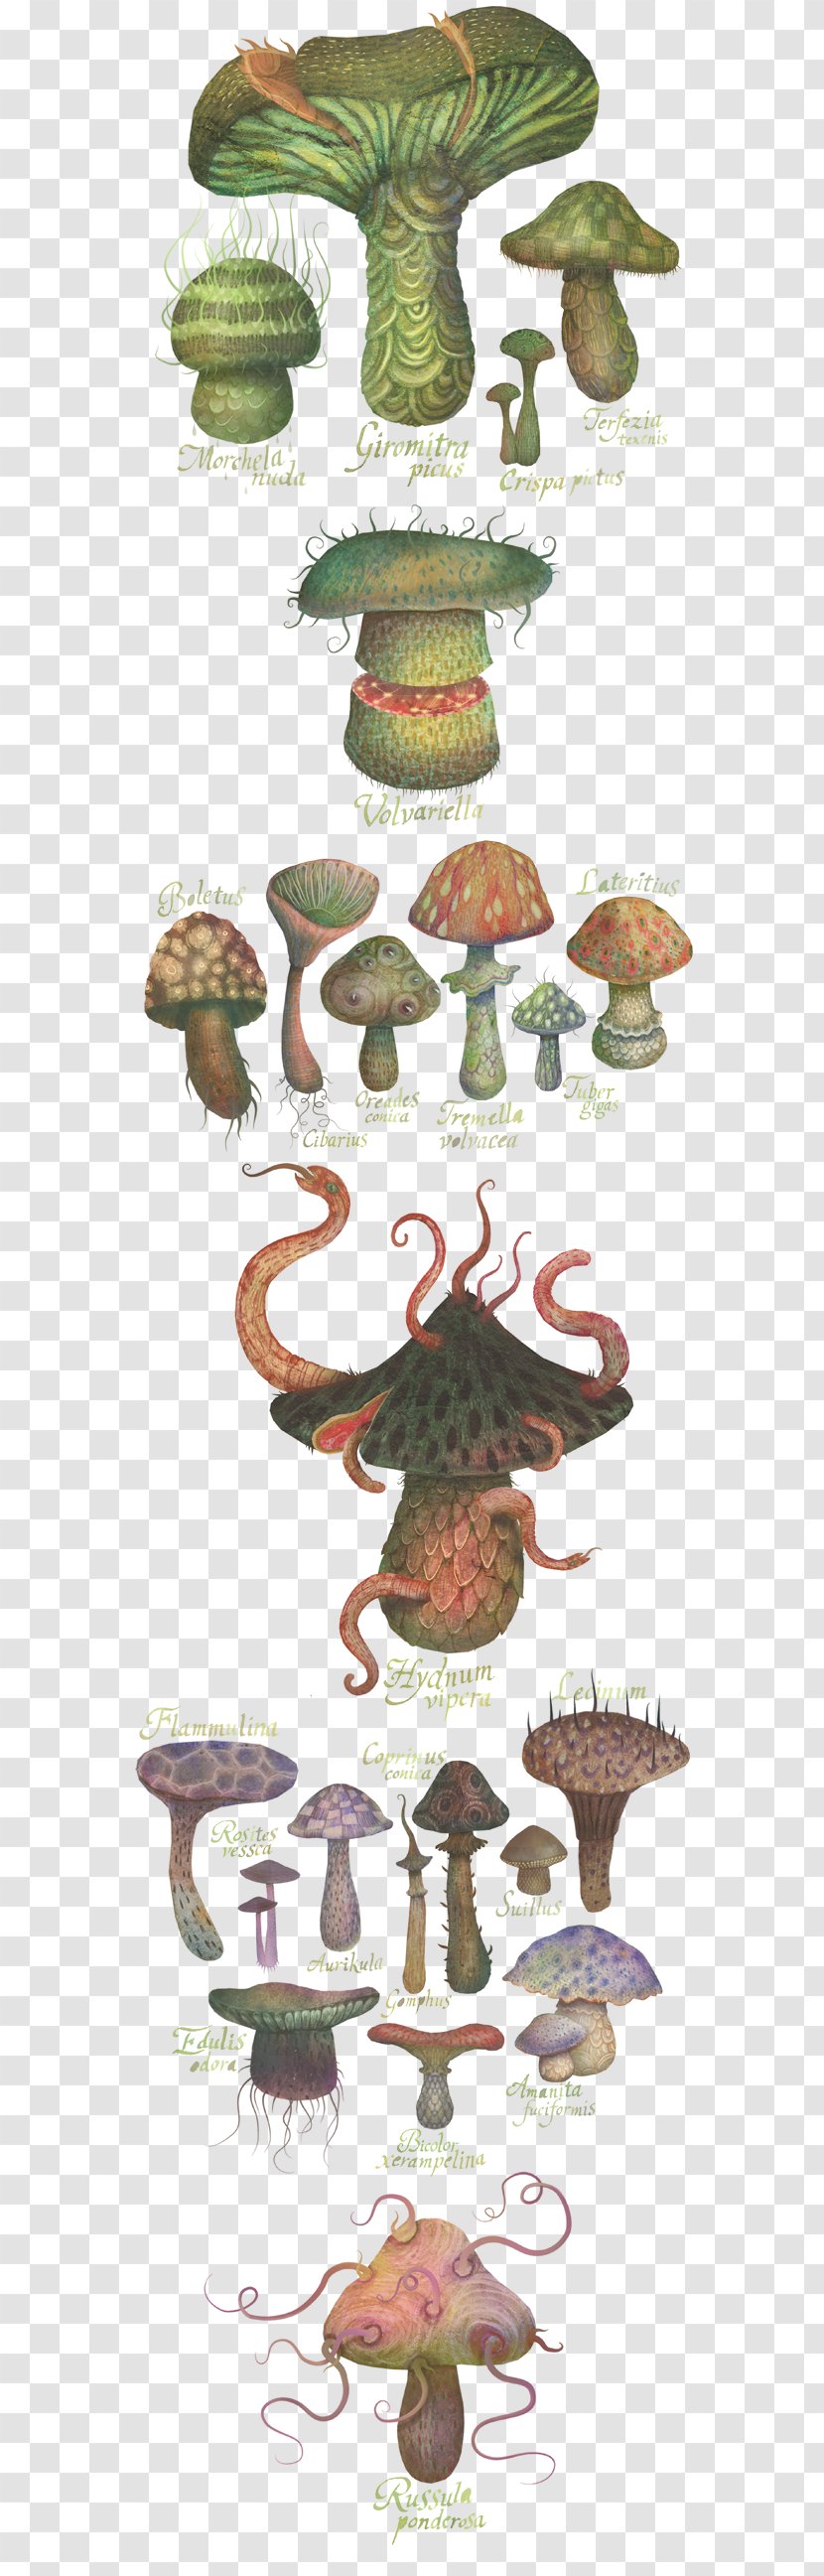 Drawing Botanical Illustration The Fungus Kingdom - Tree - Design Transparent PNG